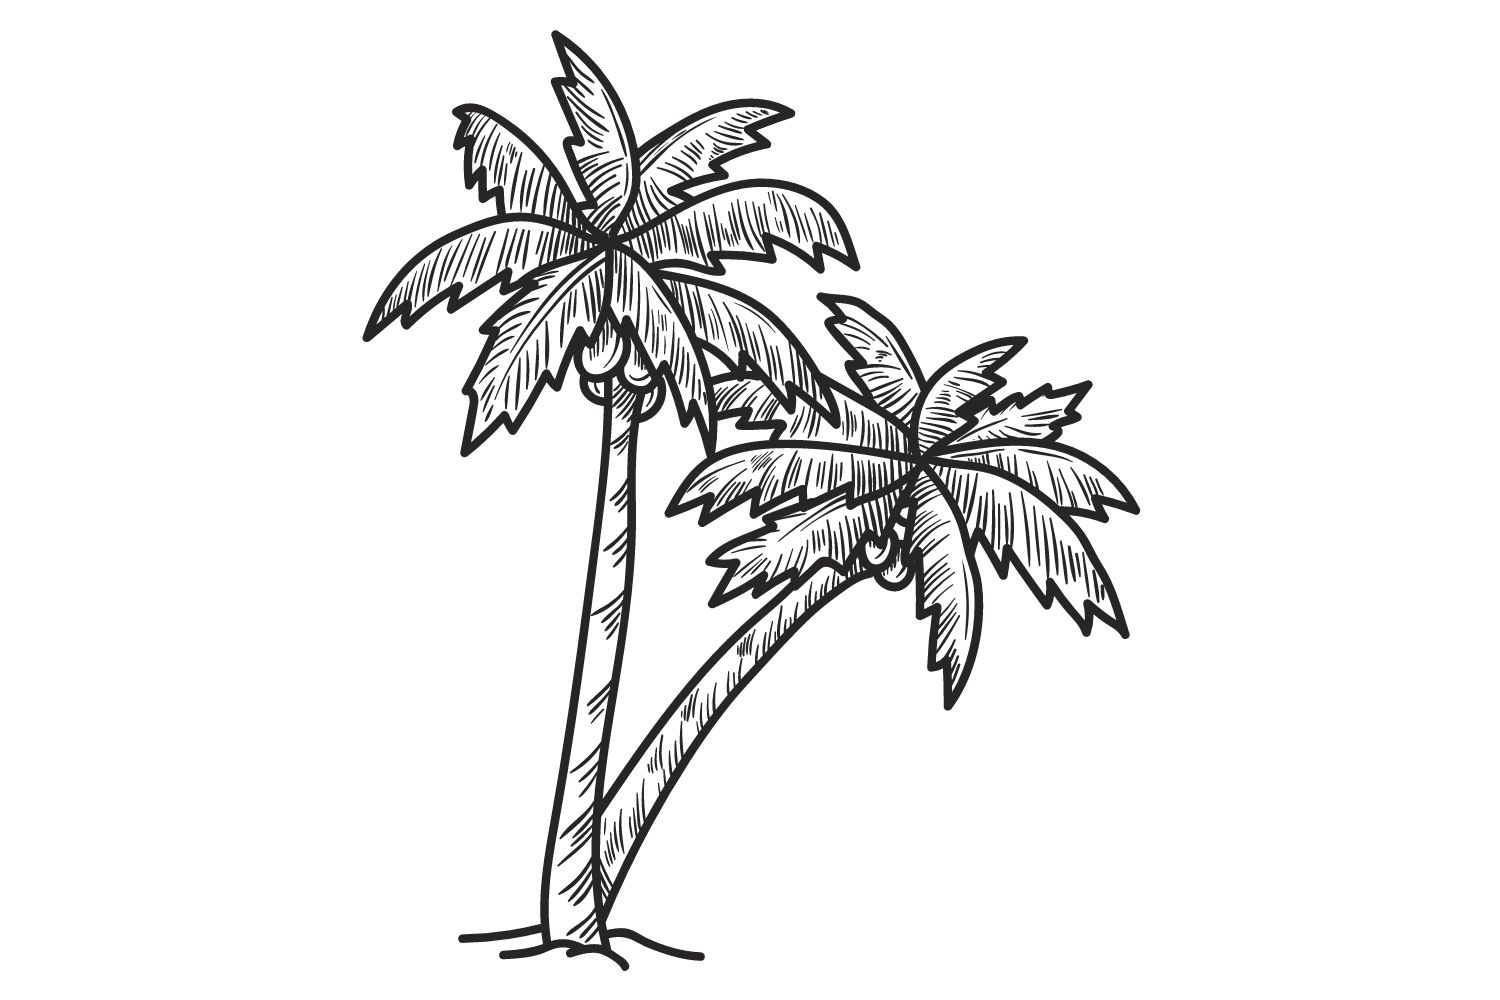 Wax Palm Tree Day